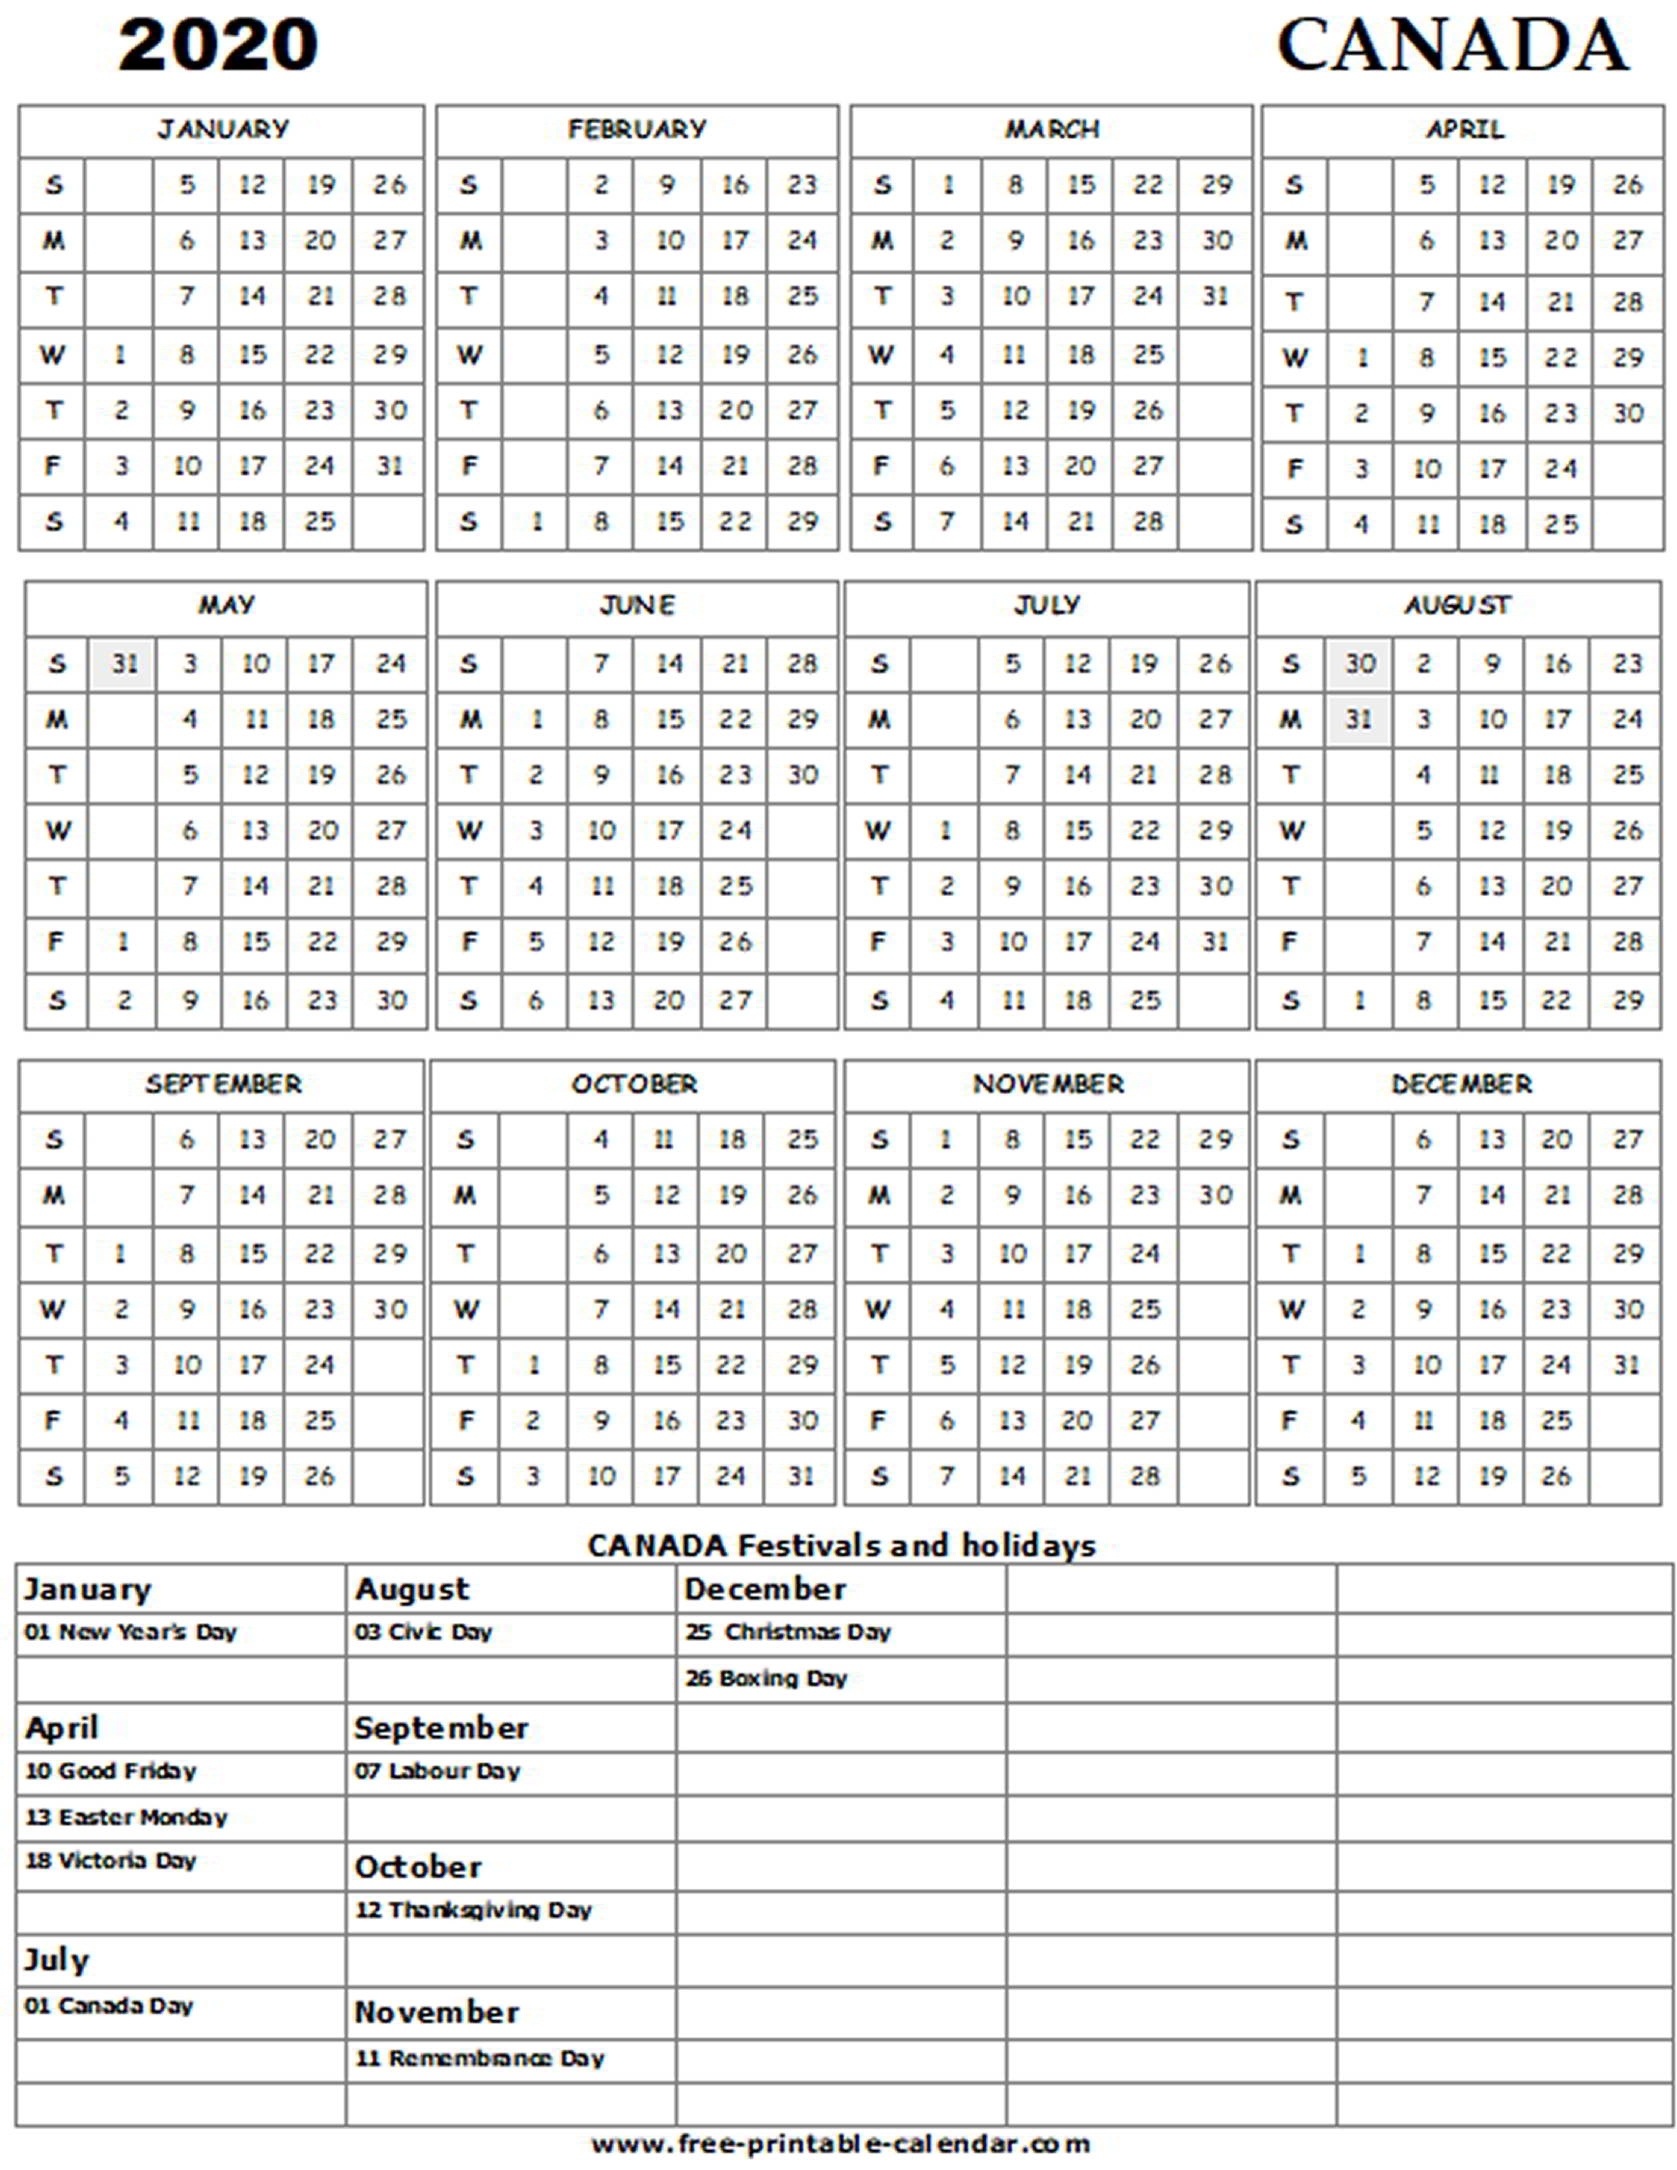 2020 Canada Holiday Calendar - Free-Printable-Calendar 2020 Calendar With Holidays And Observances